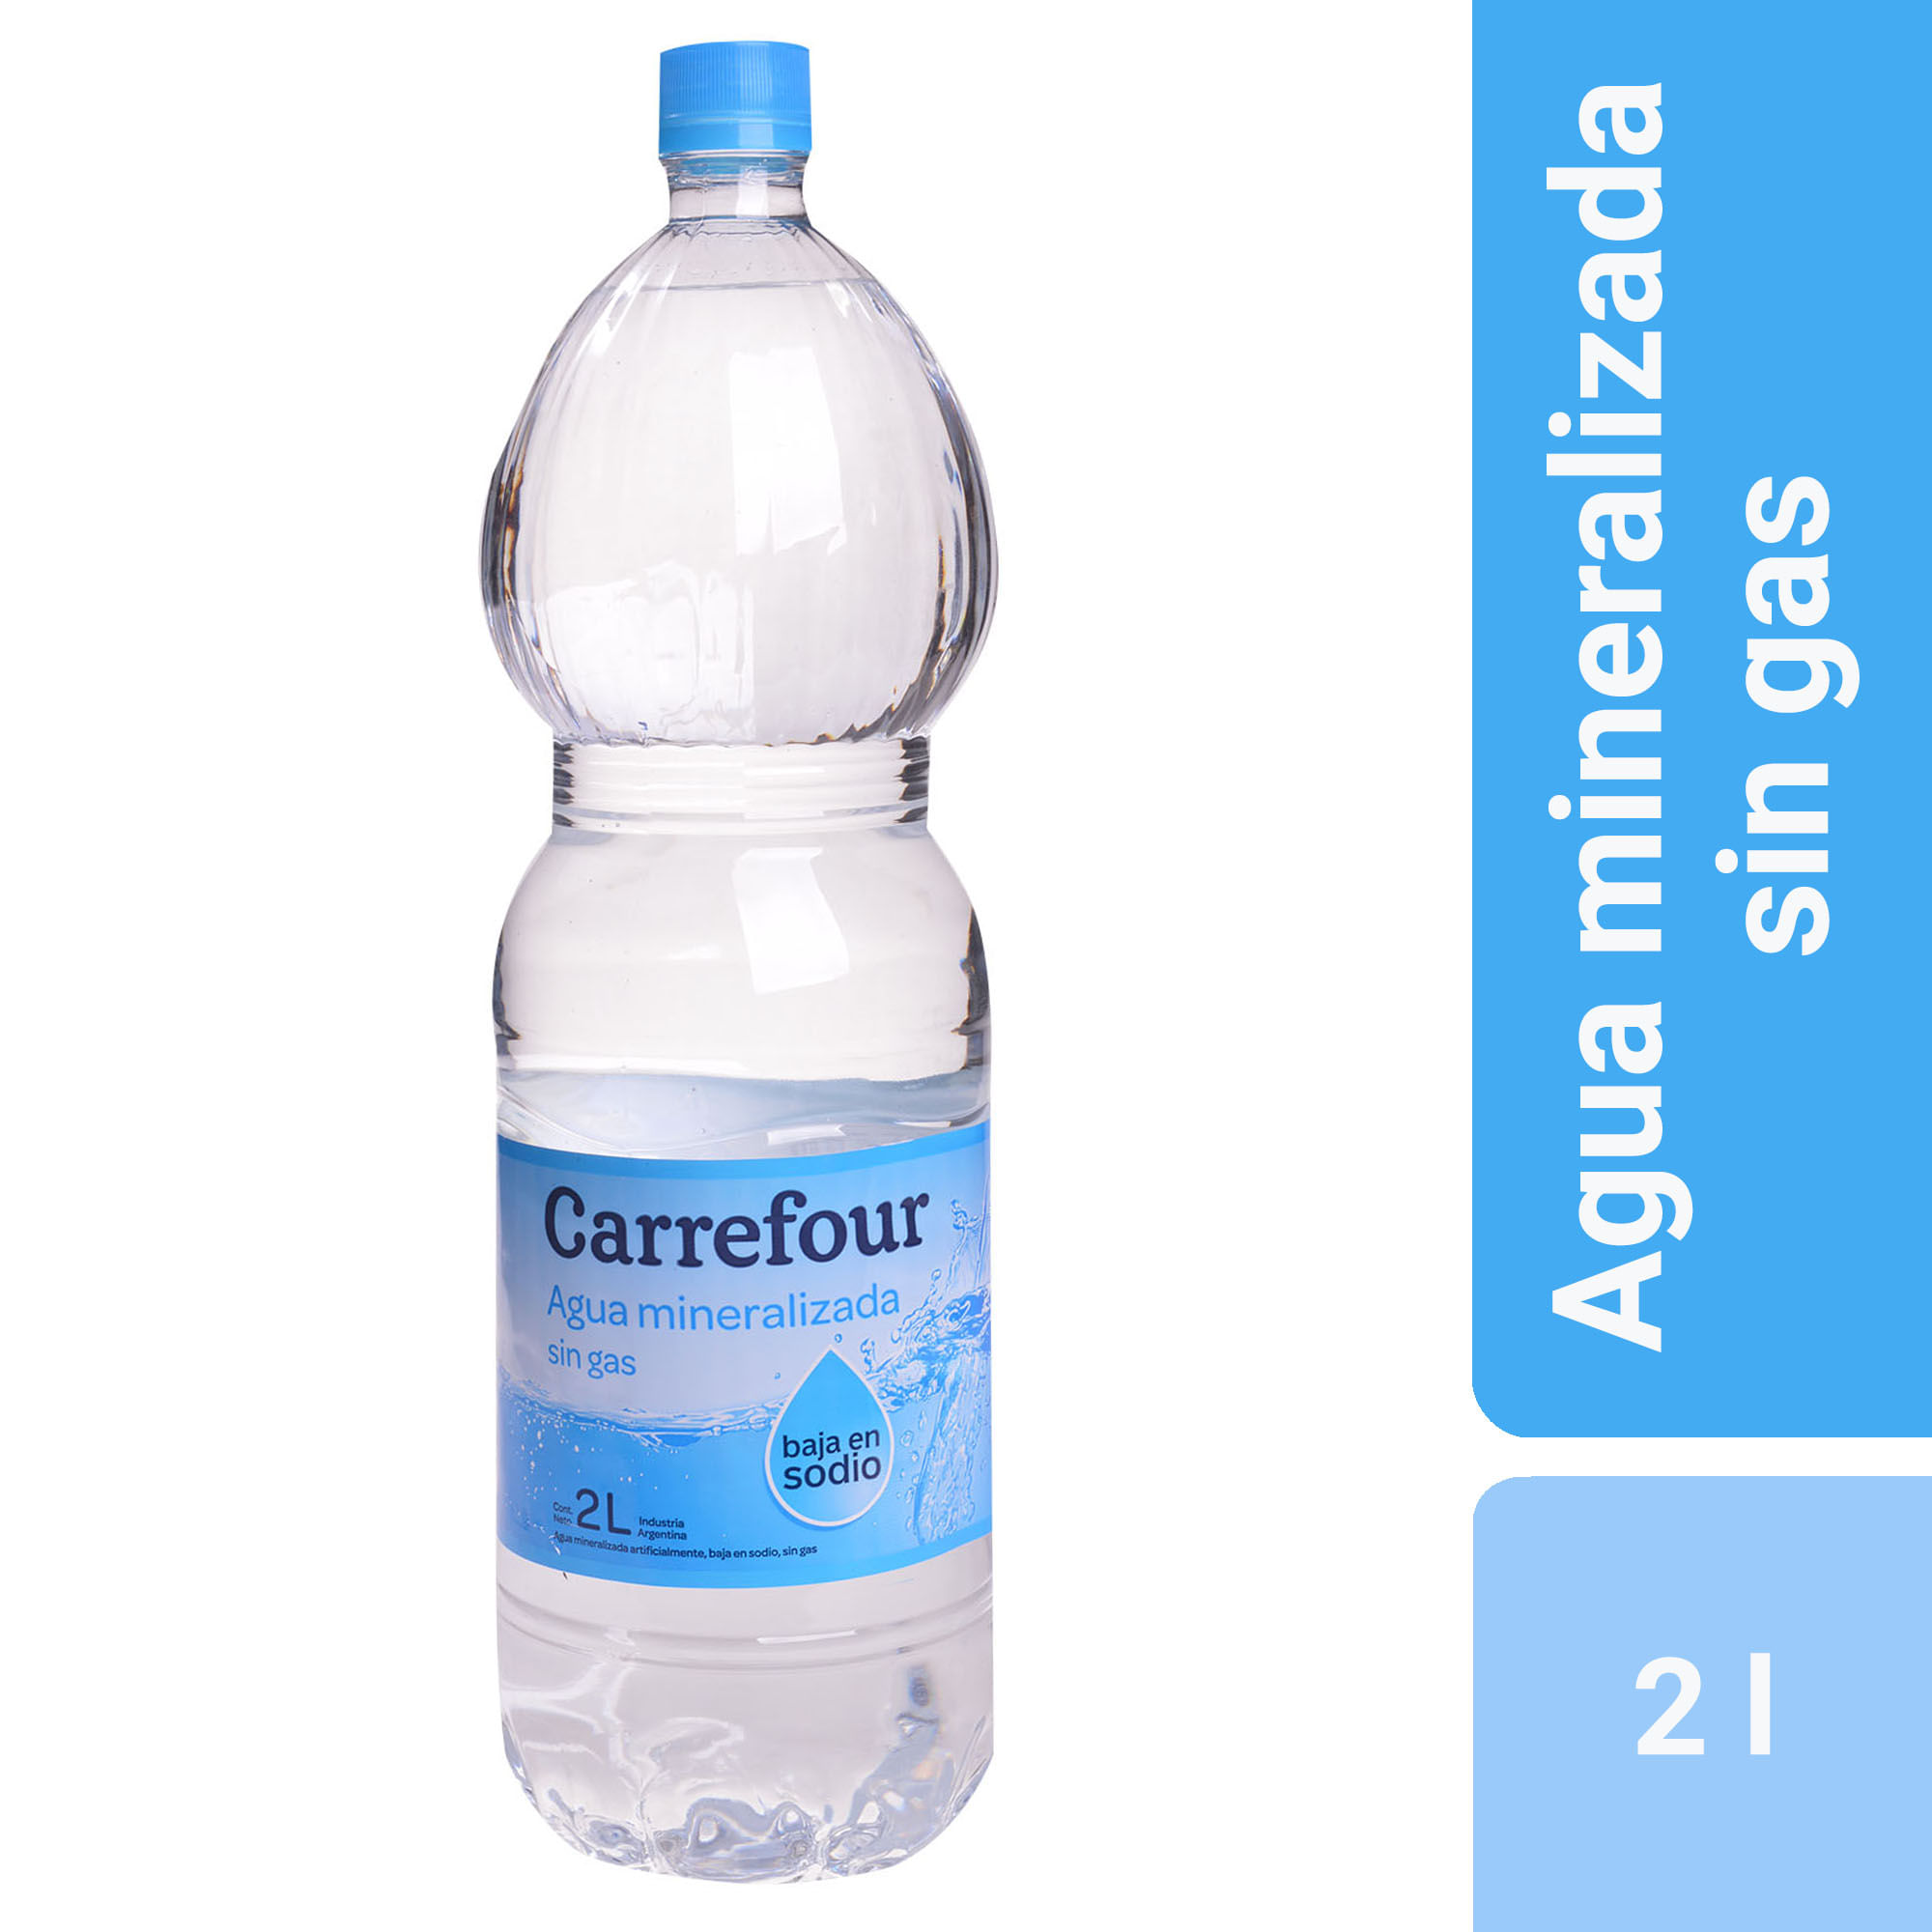 Descortés chupar patio de recreo Agua mineralizada sin gas Carrefour bajo sodio 2 l. - Carrefour